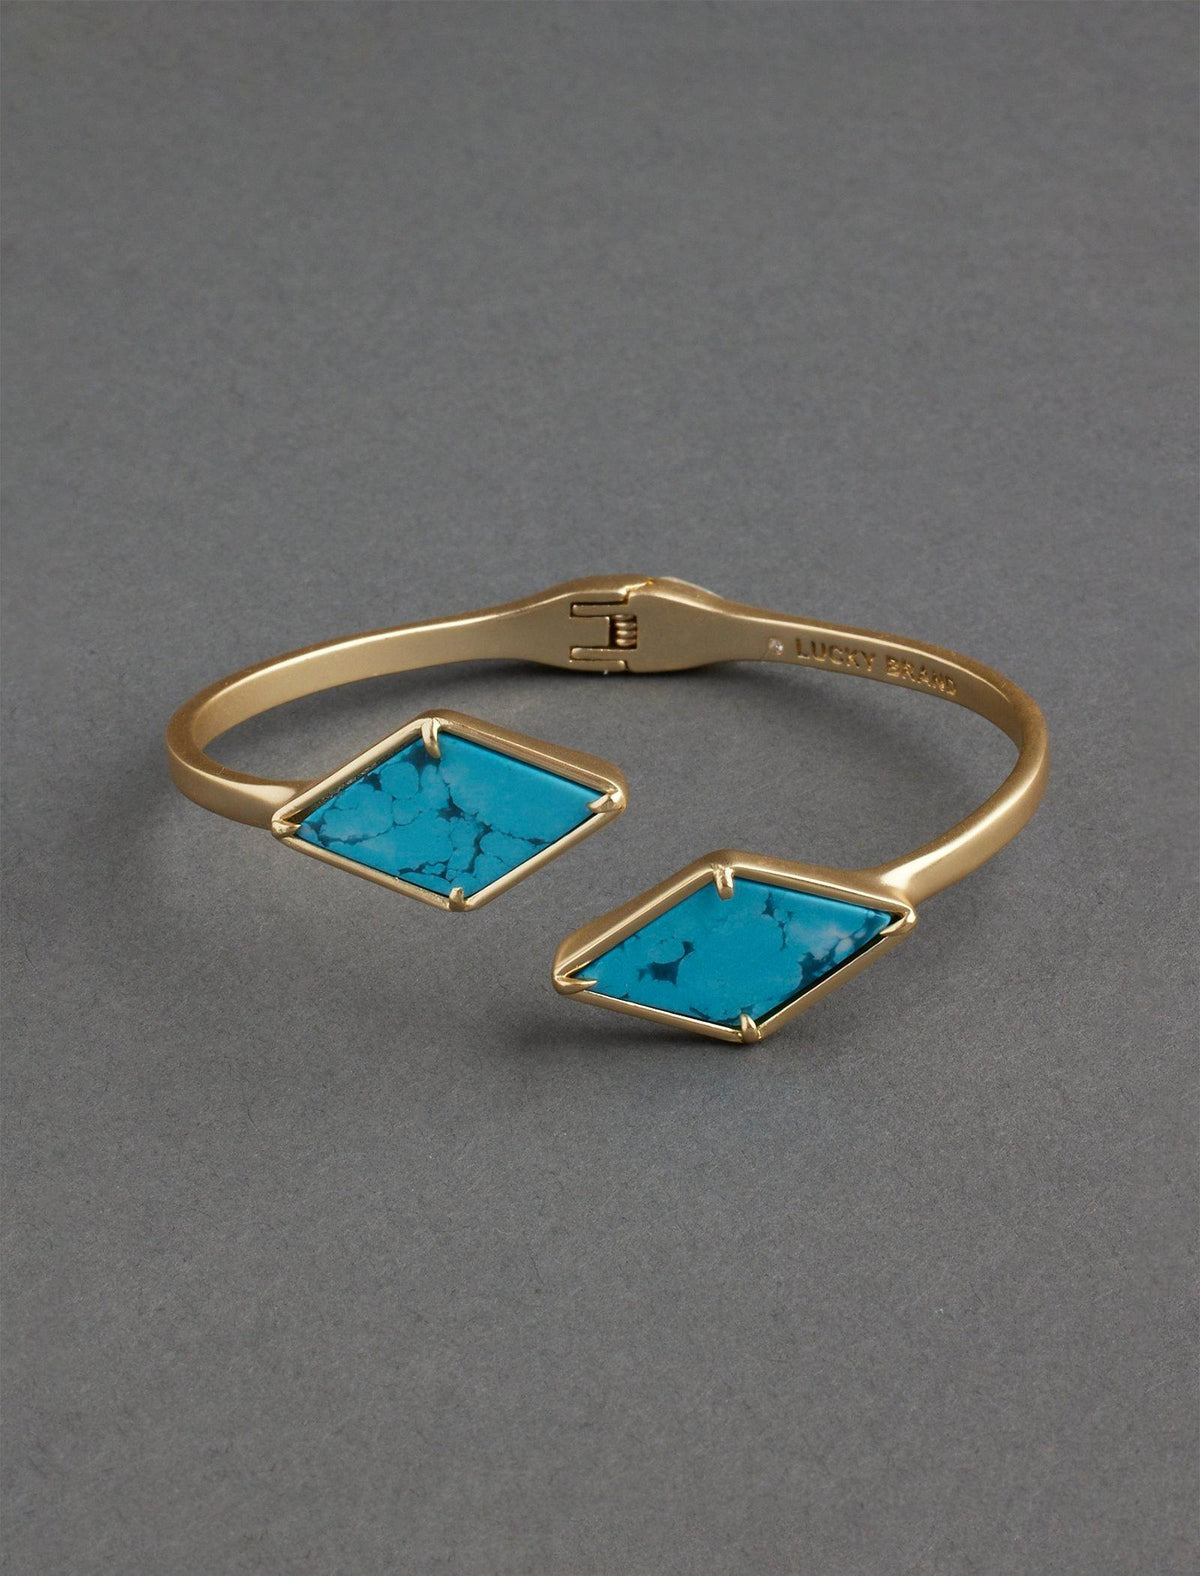 Lucky Brand Diamond Turquoise Hinge Cuff Bracelet Gold